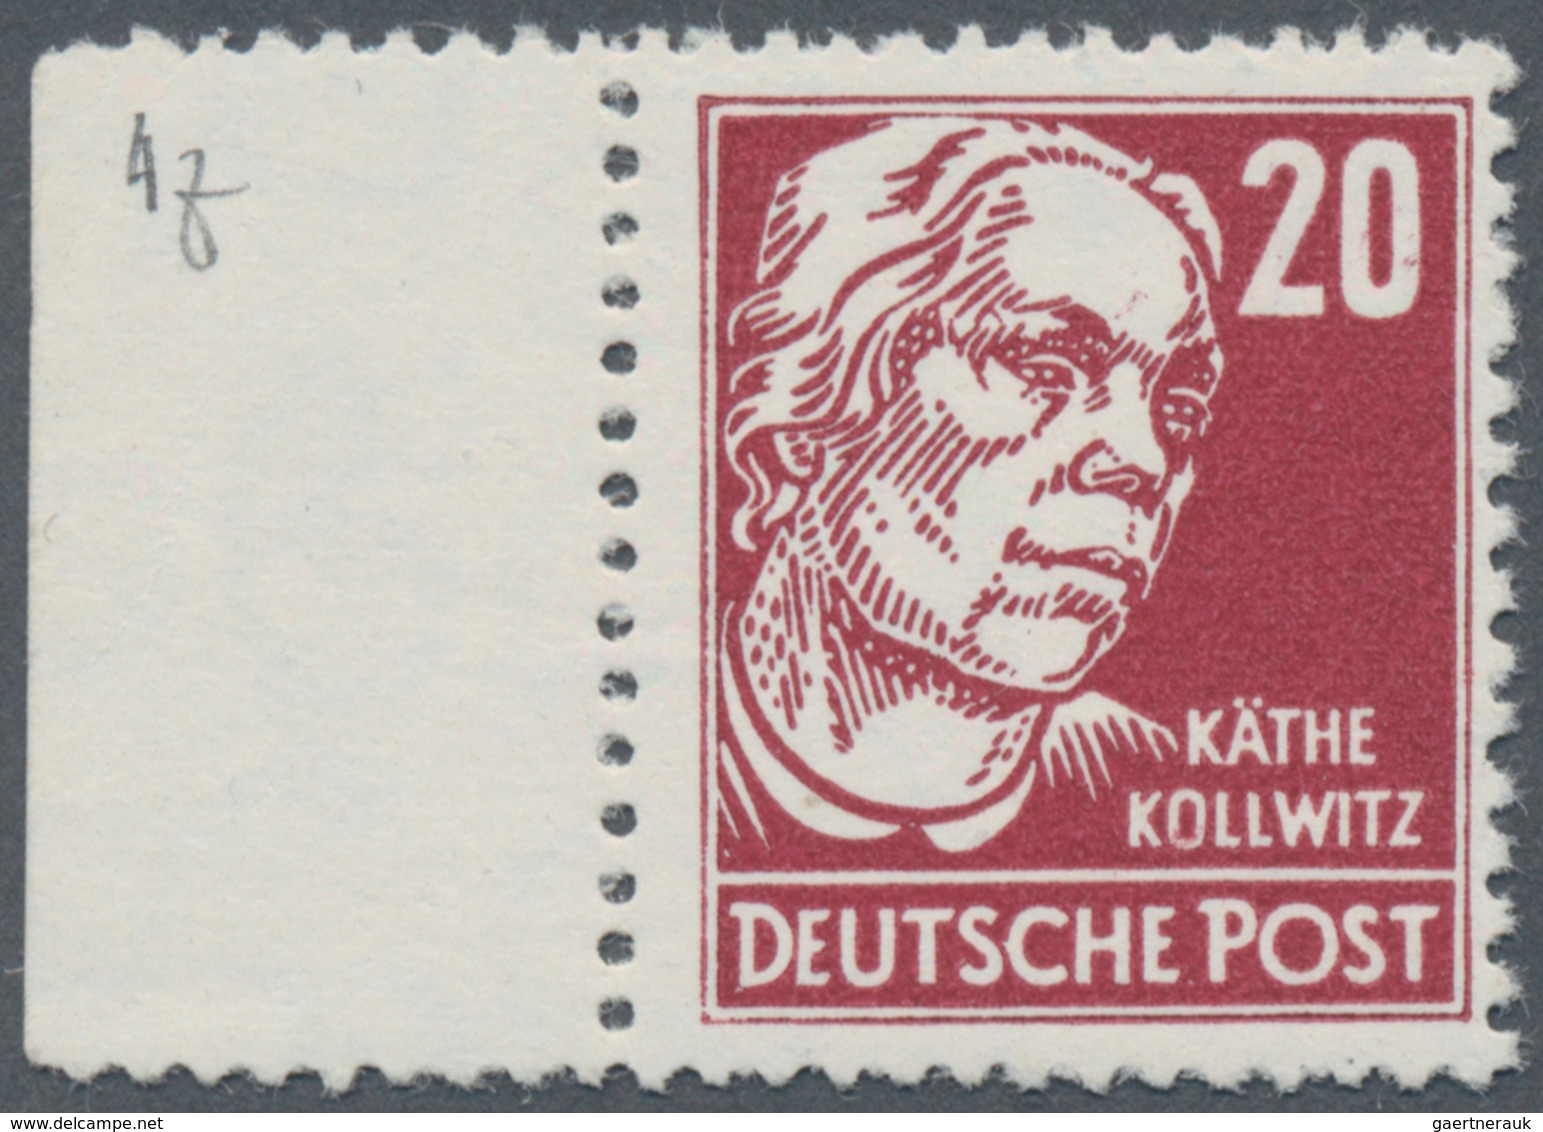 DDR: 1953, 20 Pfg. Köpfe II, Käthe Kollwitz Lebhatkarminrot Auf Gestrichenem Papier Mit Senkrechtem - Lettres & Documents